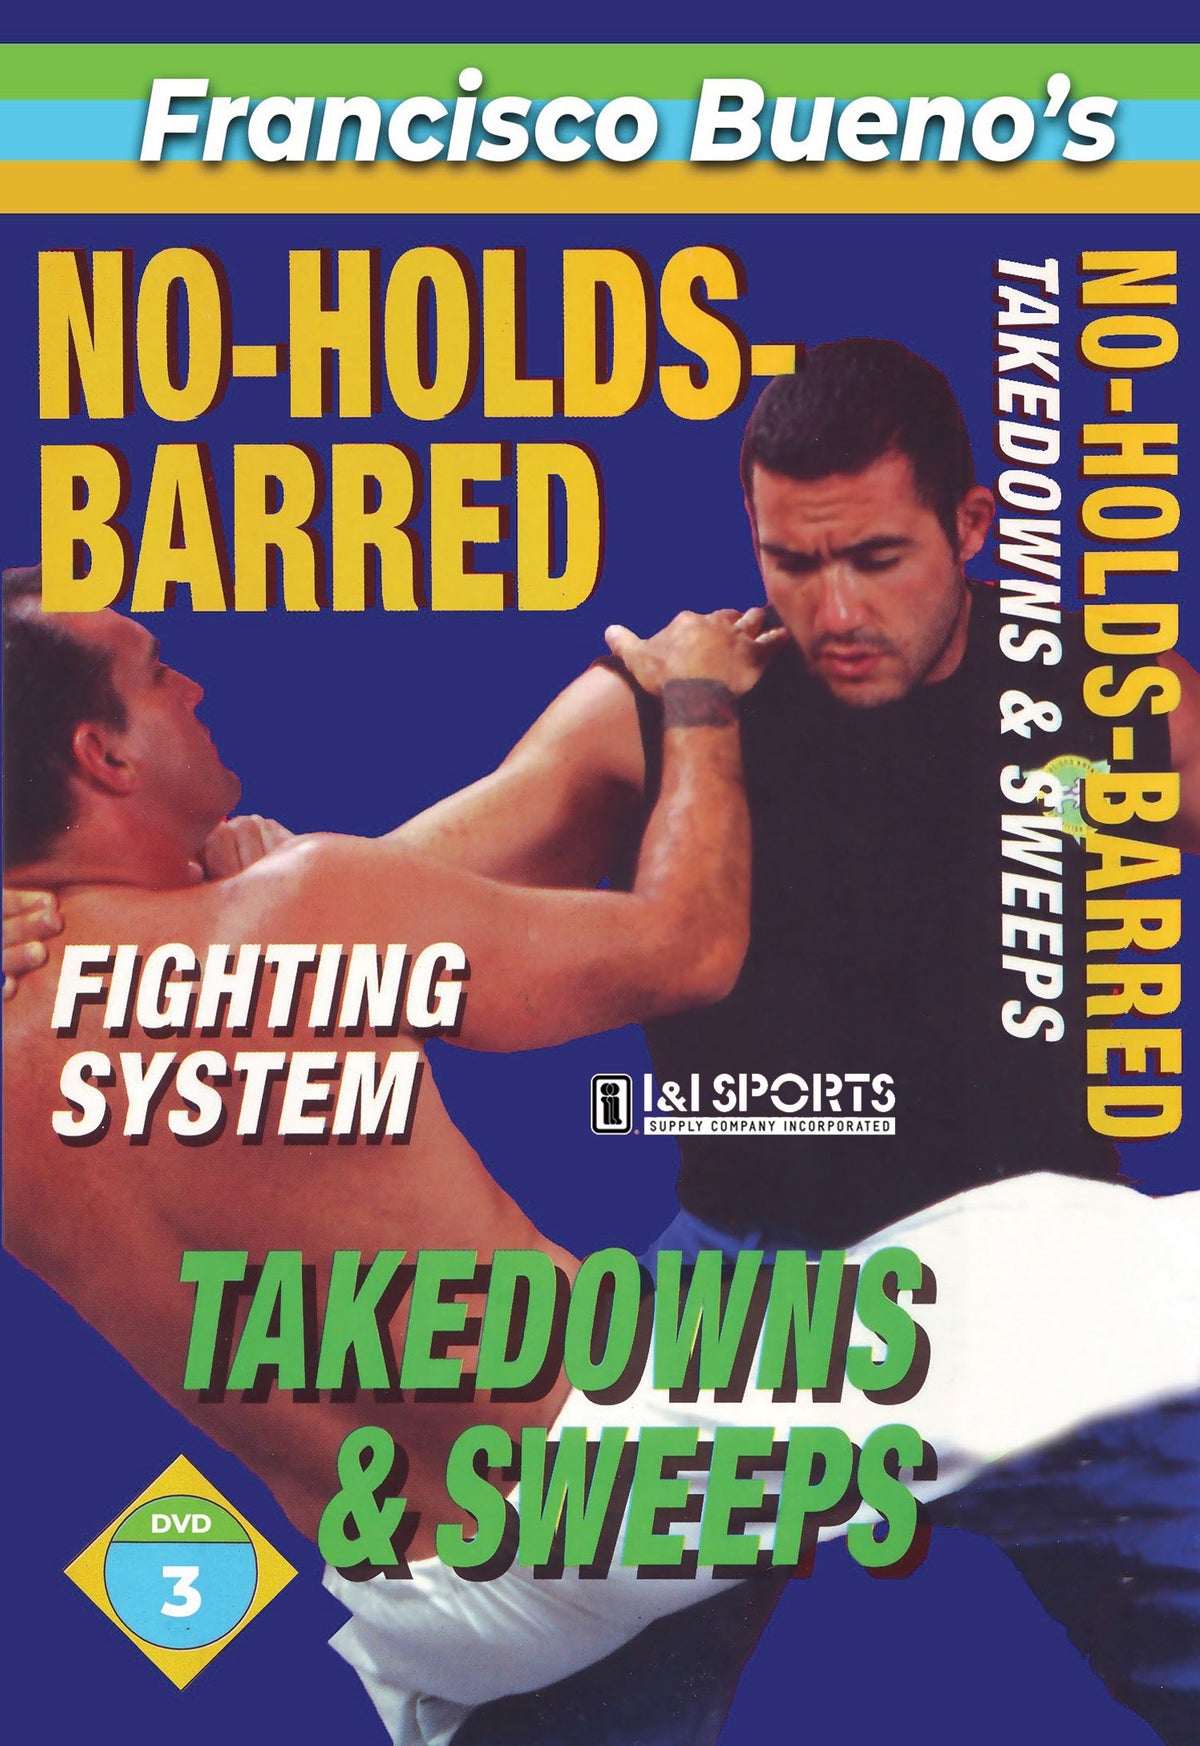 No Holds Barred #3 Vale Tudo Takedowns & Leg Sweeps DVD Francisco Bueno mma